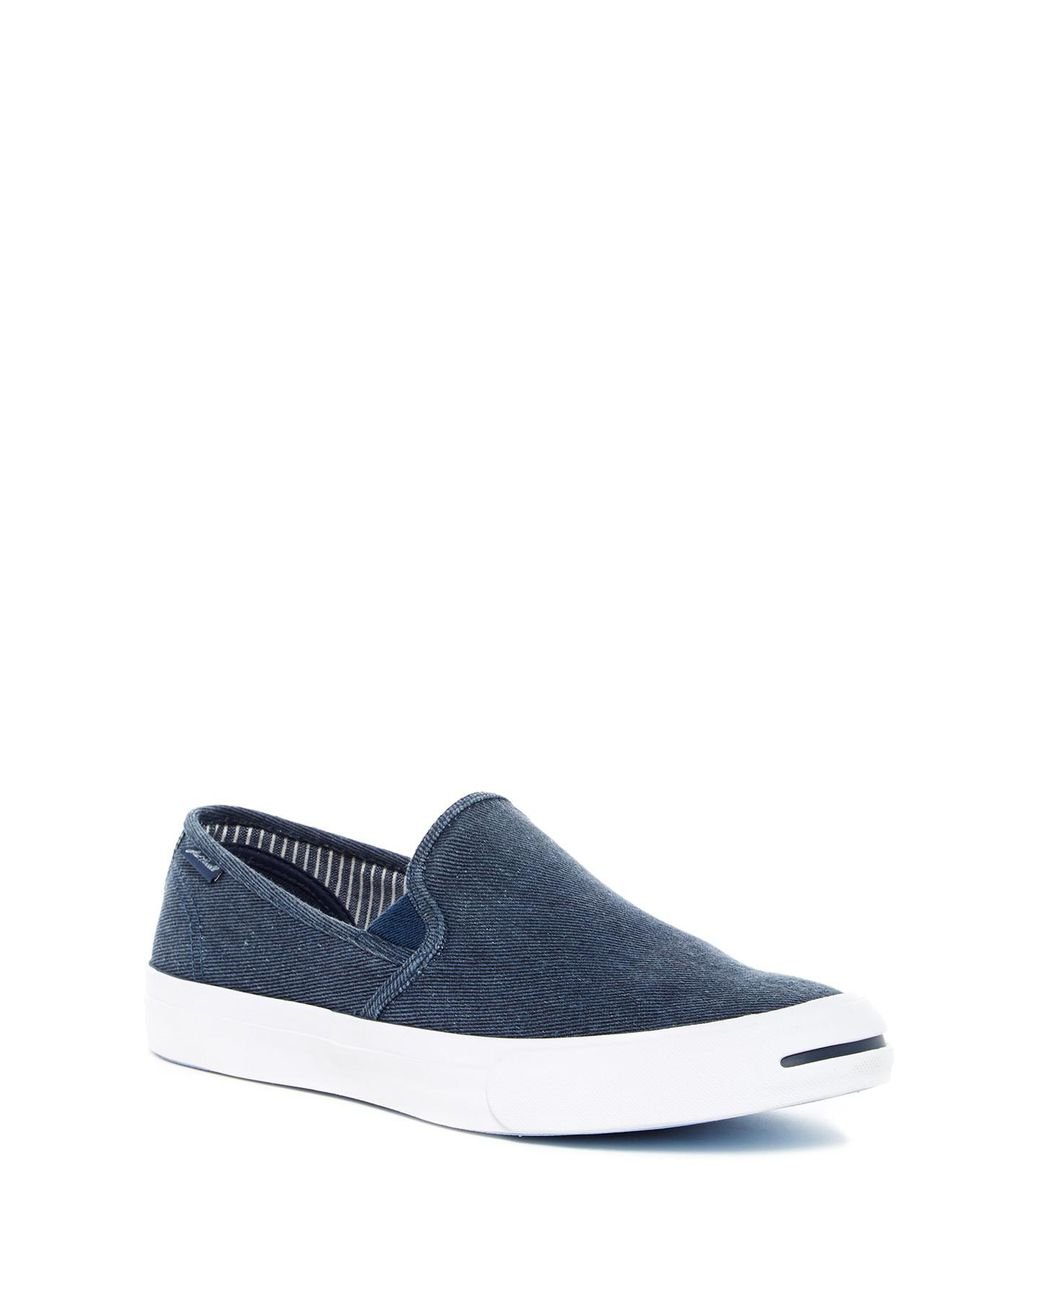 Converse Jack Purcell Ii Slip-on Sneaker in Navy-White-Navy (Blue) for Men  | Lyst